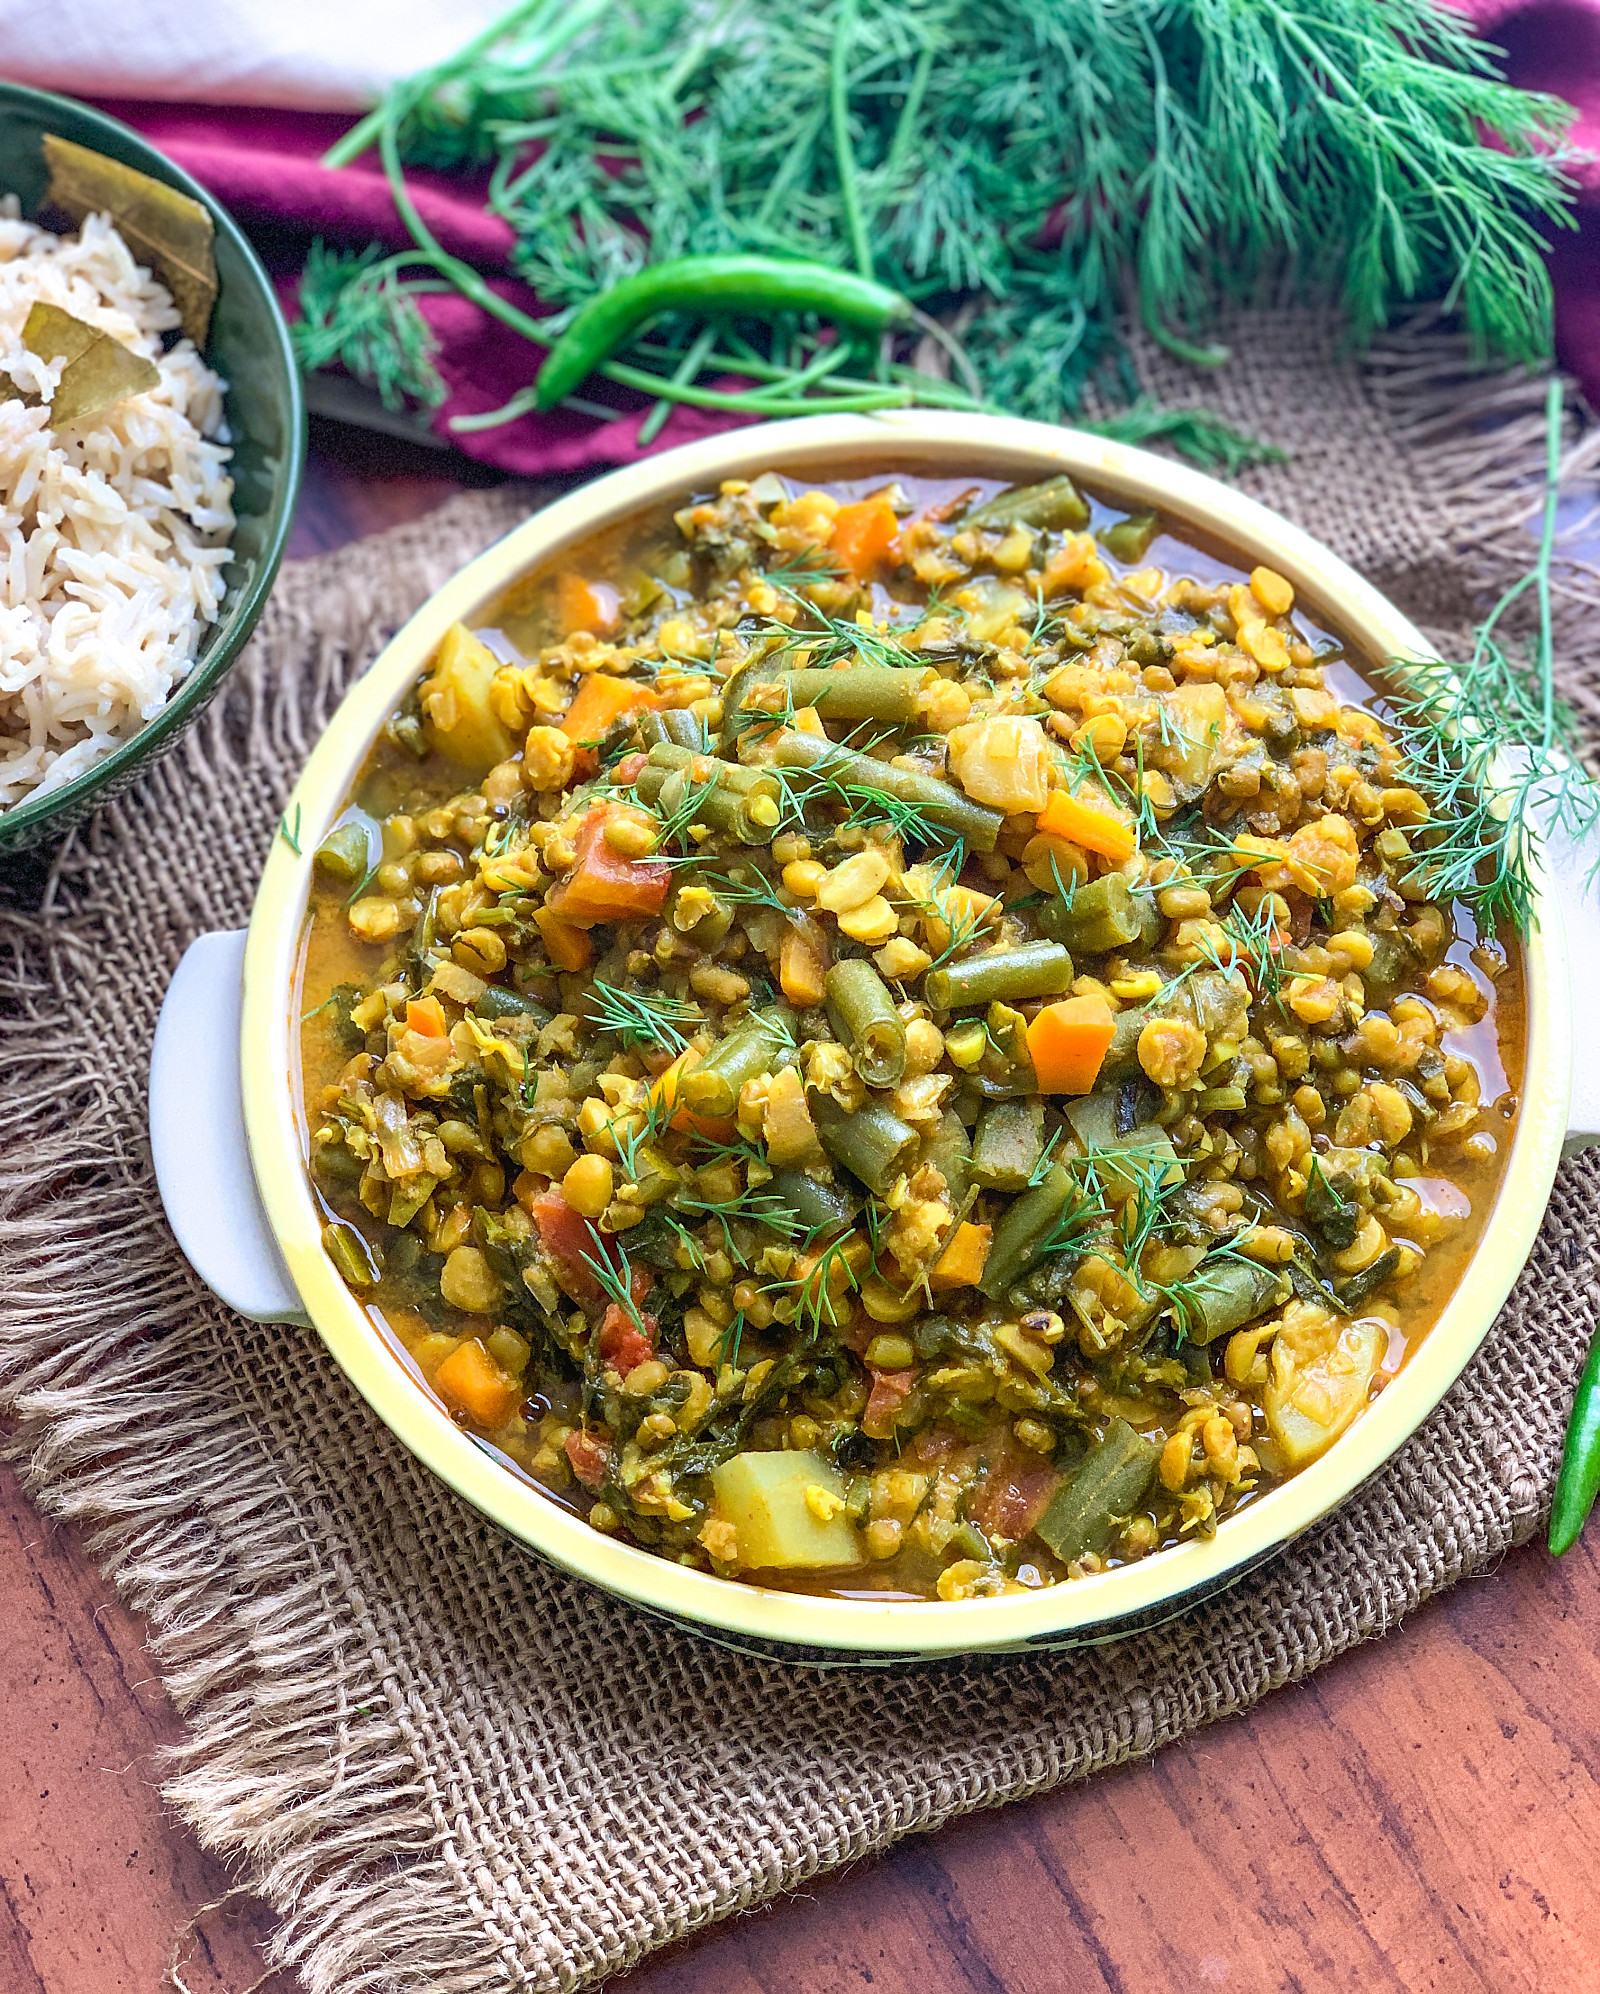 Sindhi Sai Bhaji Recipe - Wholesome Sindhi Dal With Vegetables